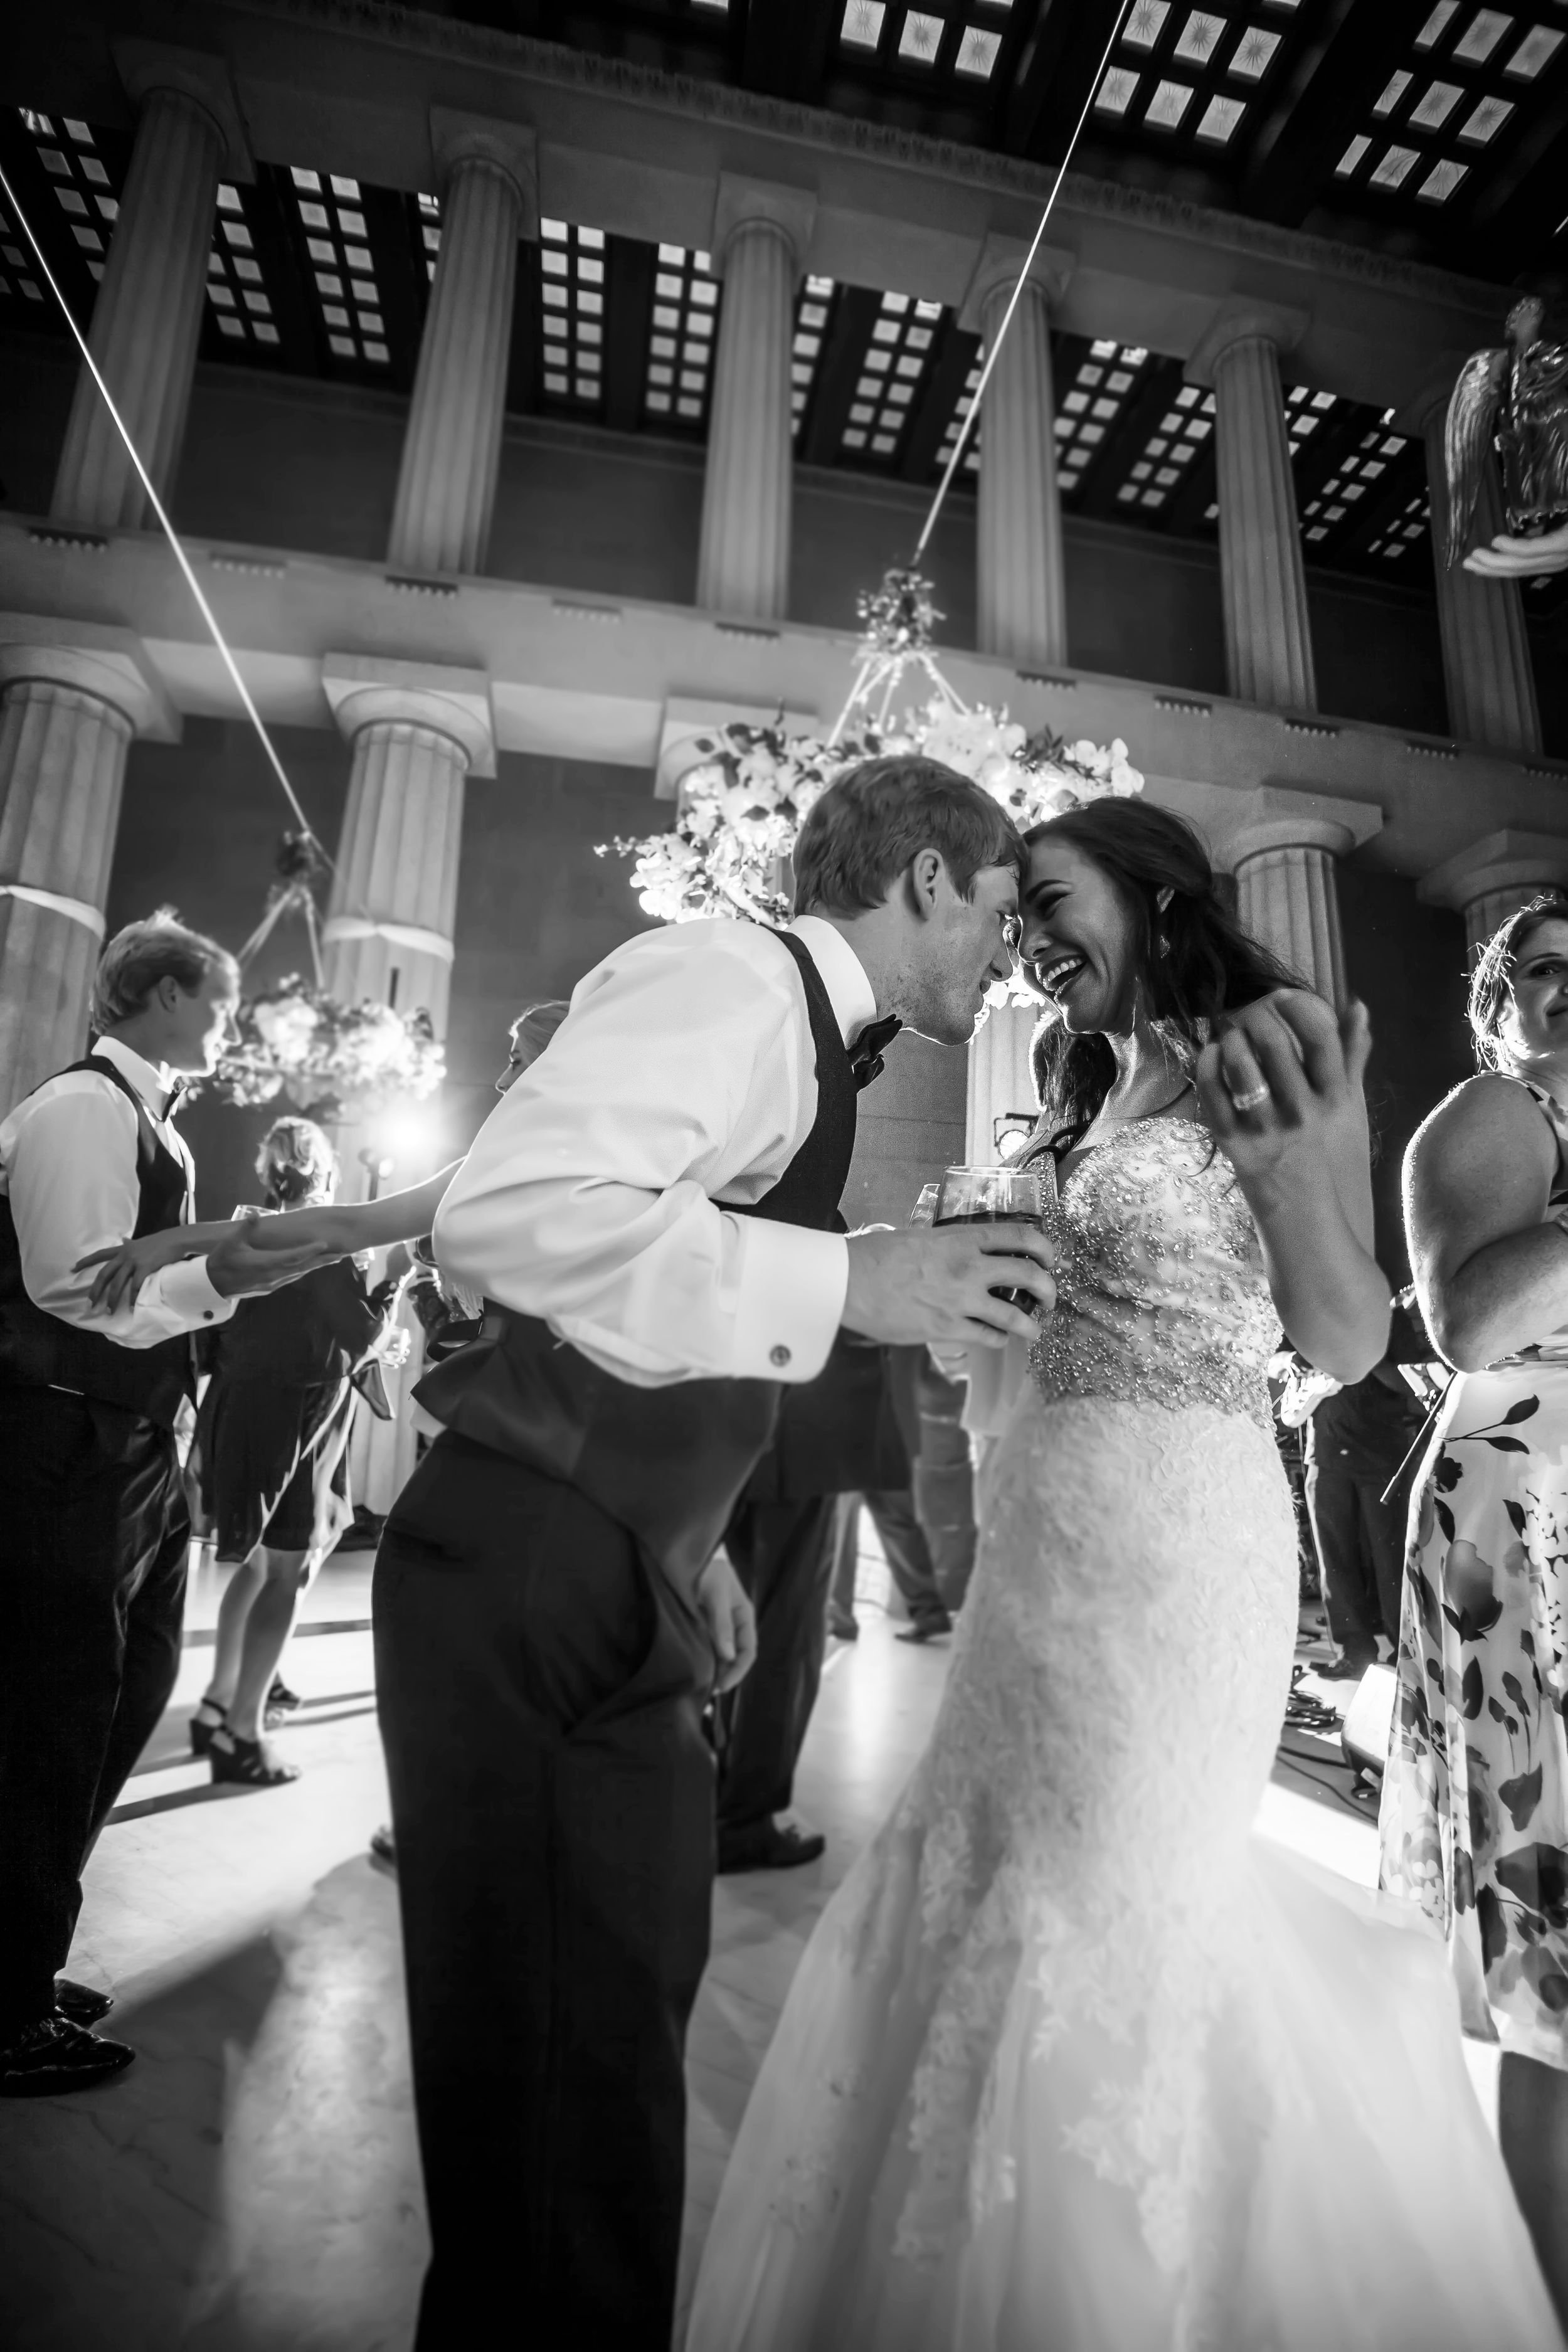 Phoenix wedding photographer Anjeanette Photography Arizona elopements and intimate ceremonies https://phoenixheadshotpro.com/phoenixengagementphotoaz